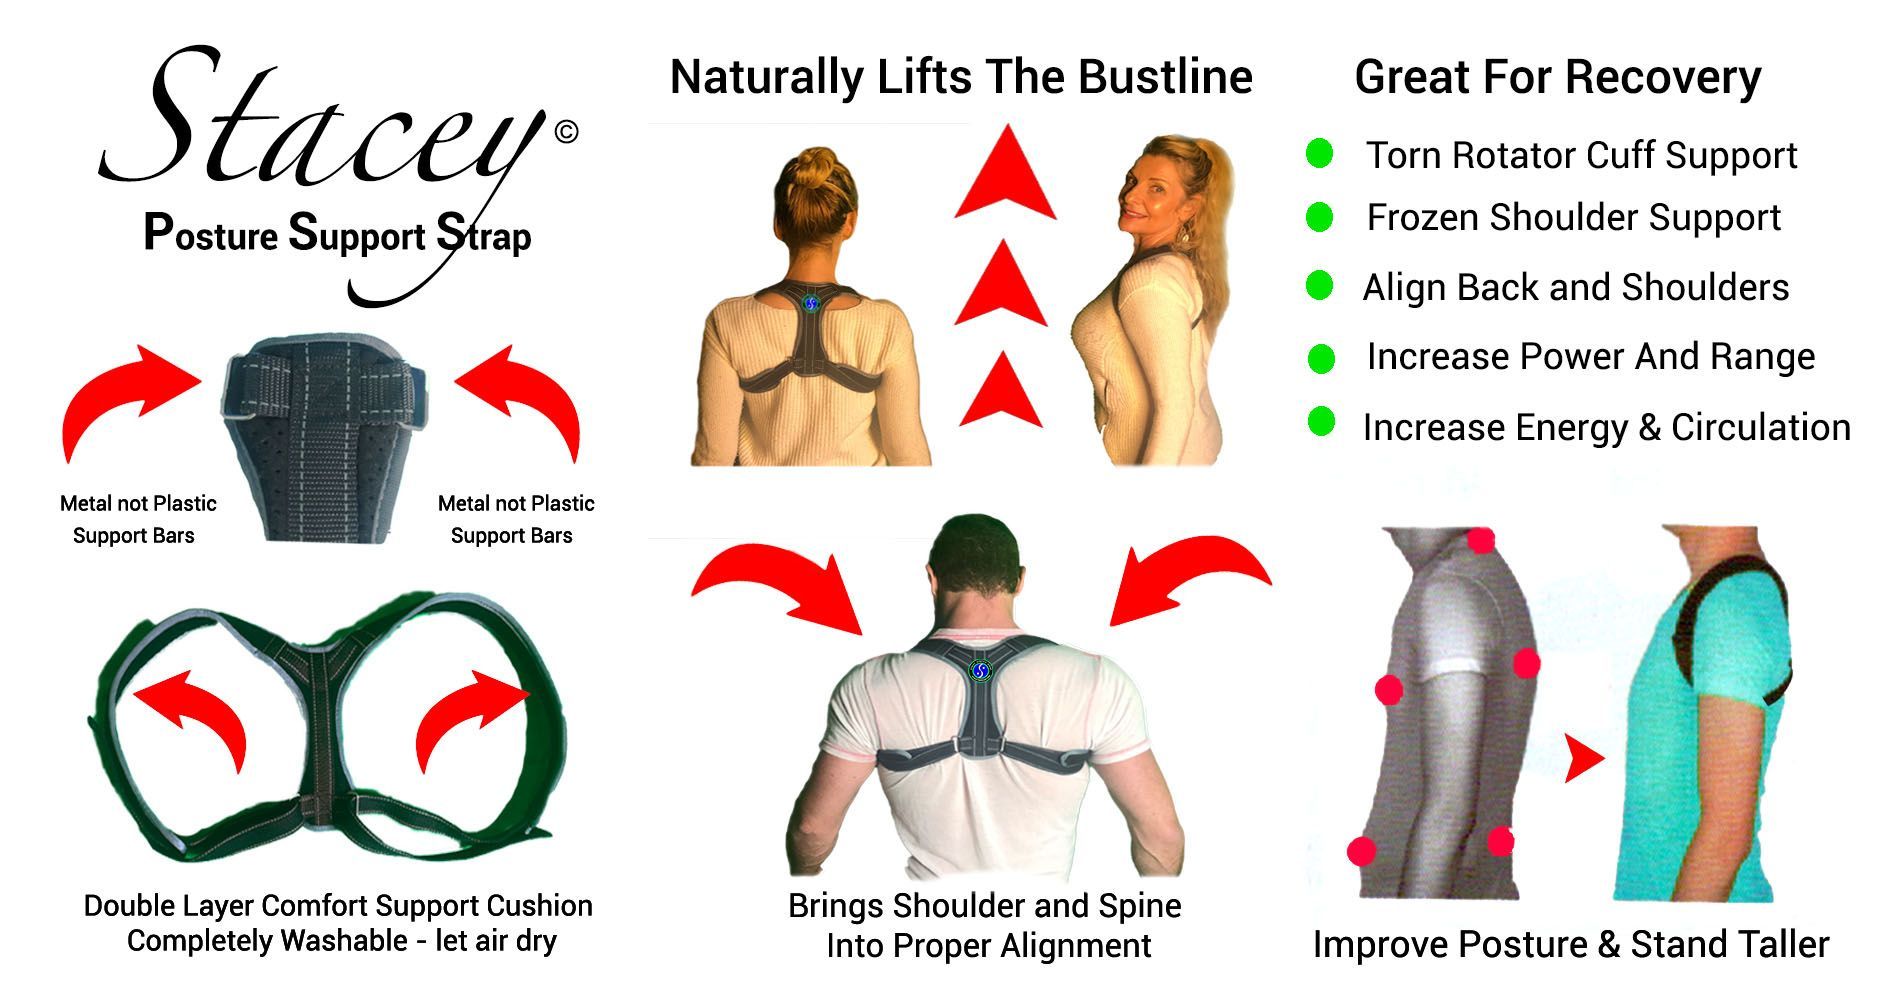 Stacey support posture strap showing benefits for neck, back & shoulders